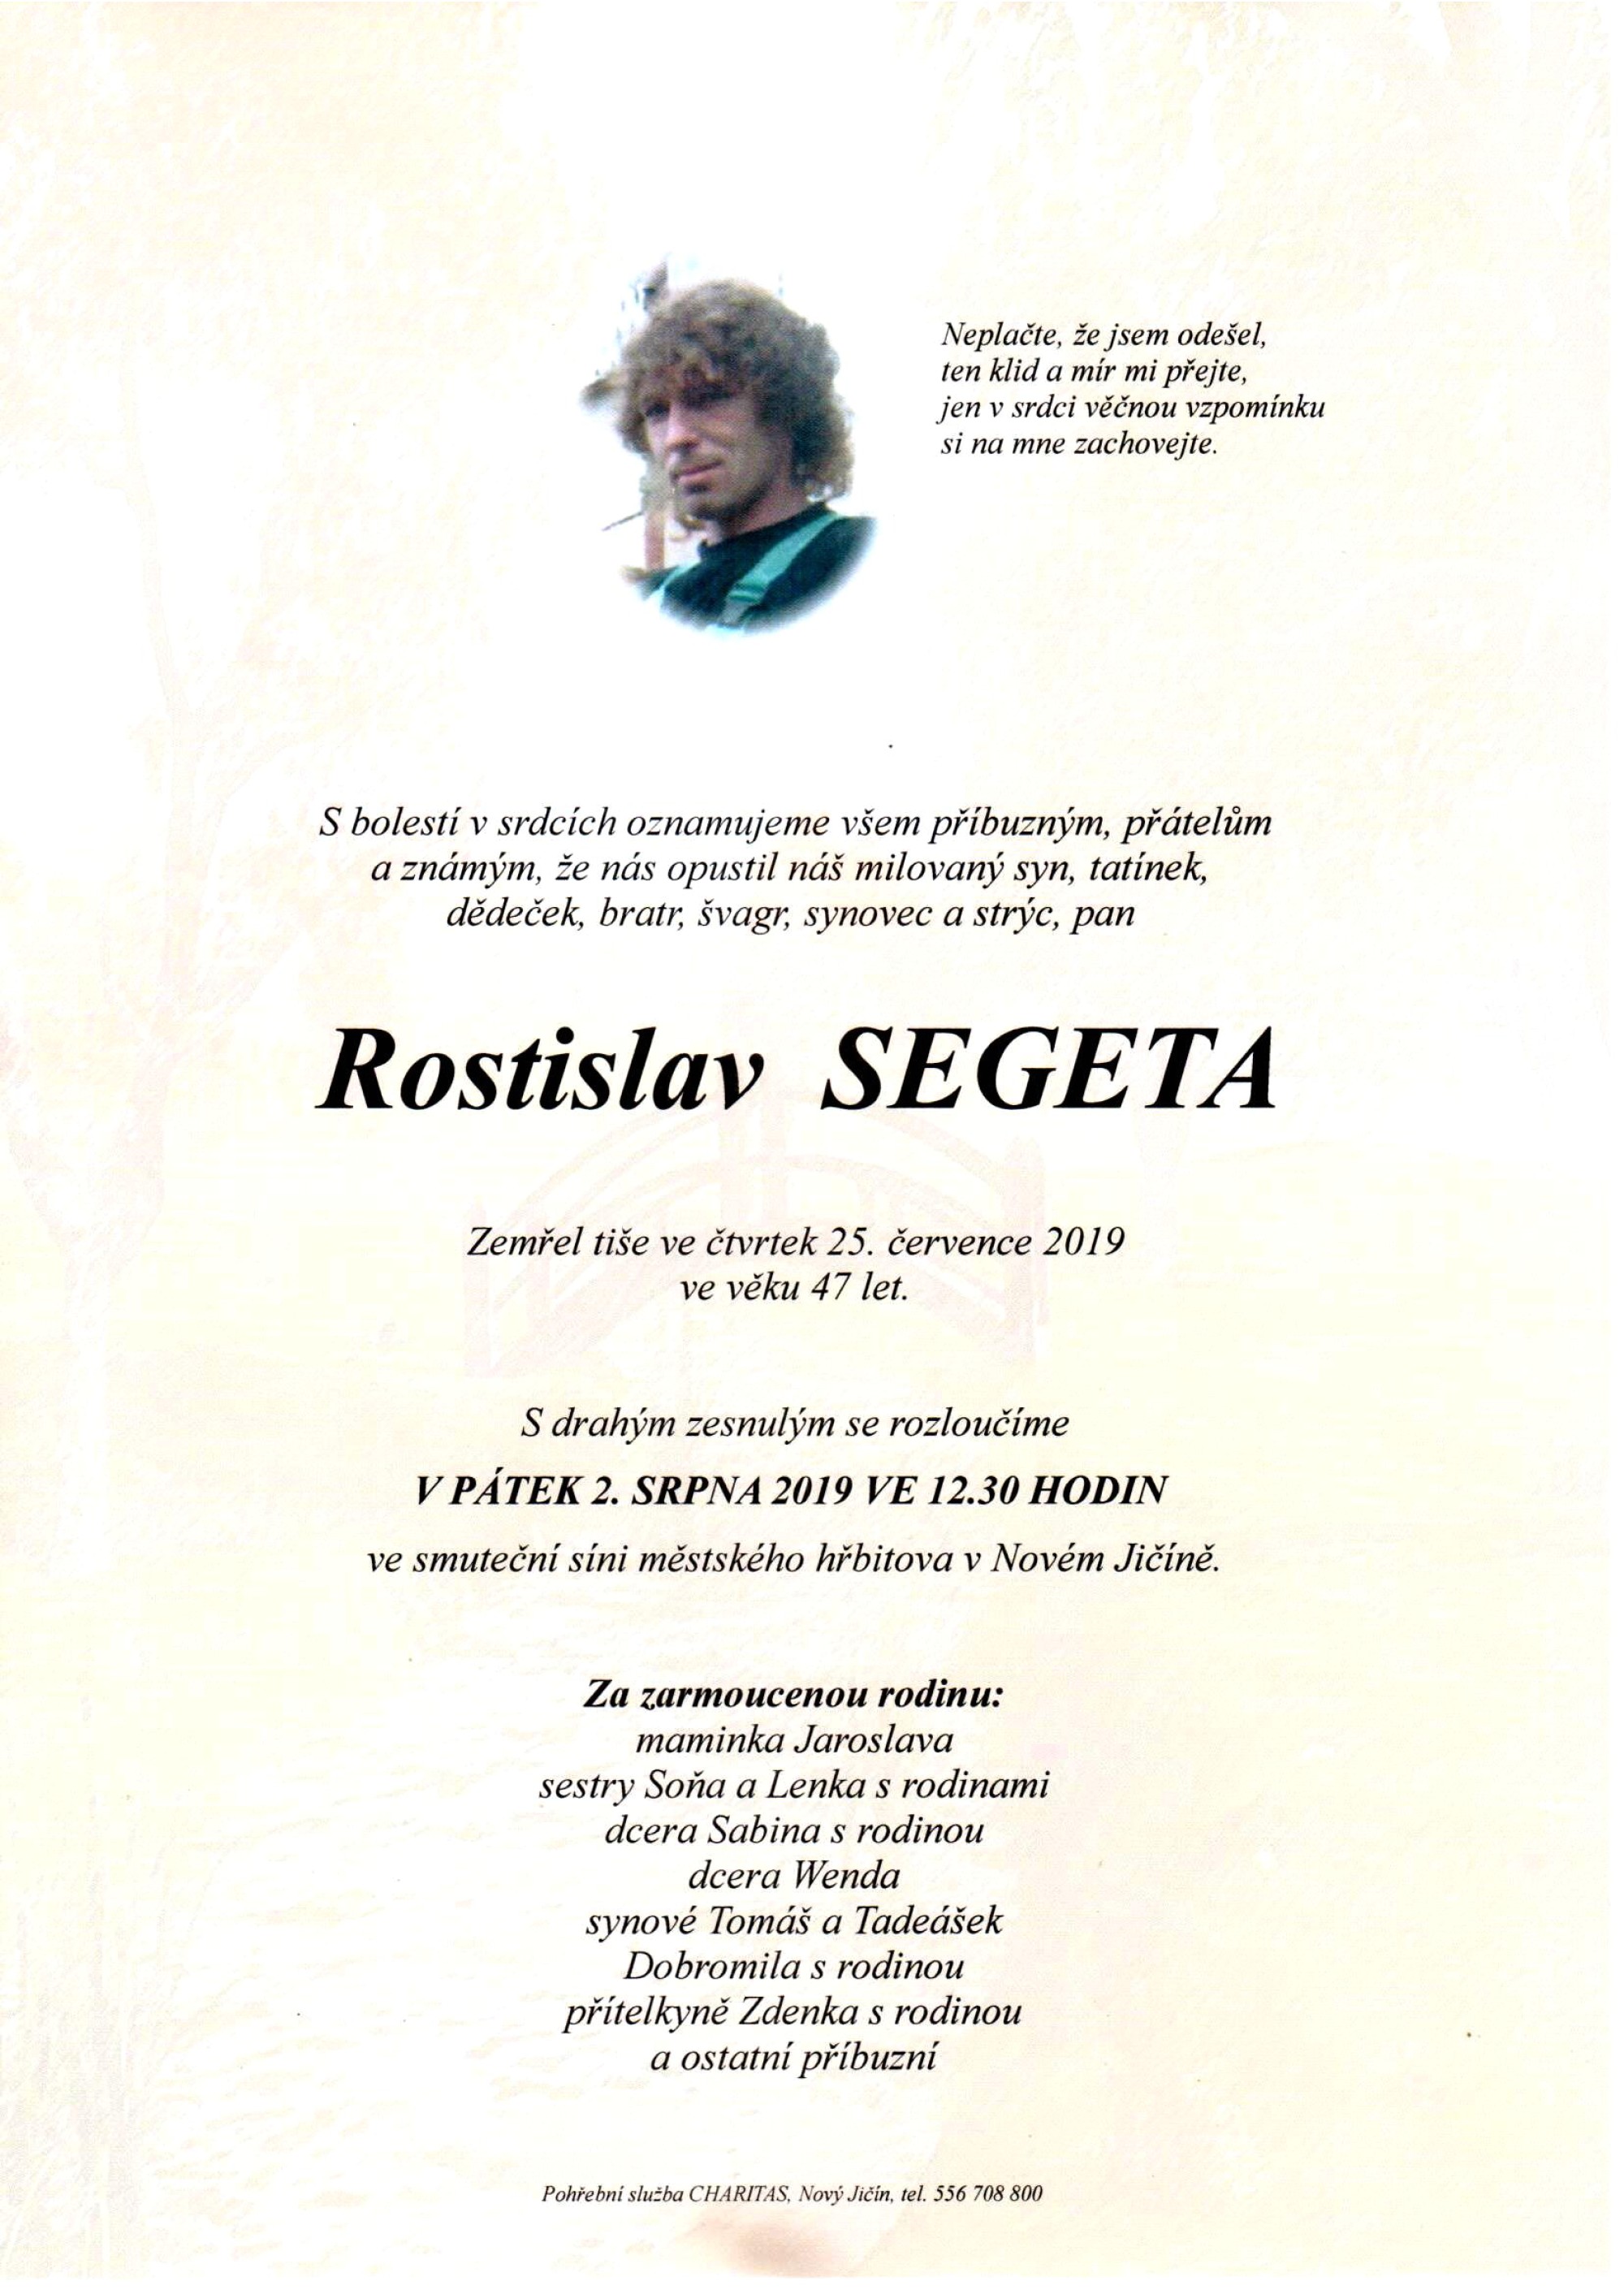 Rostislav Segeta